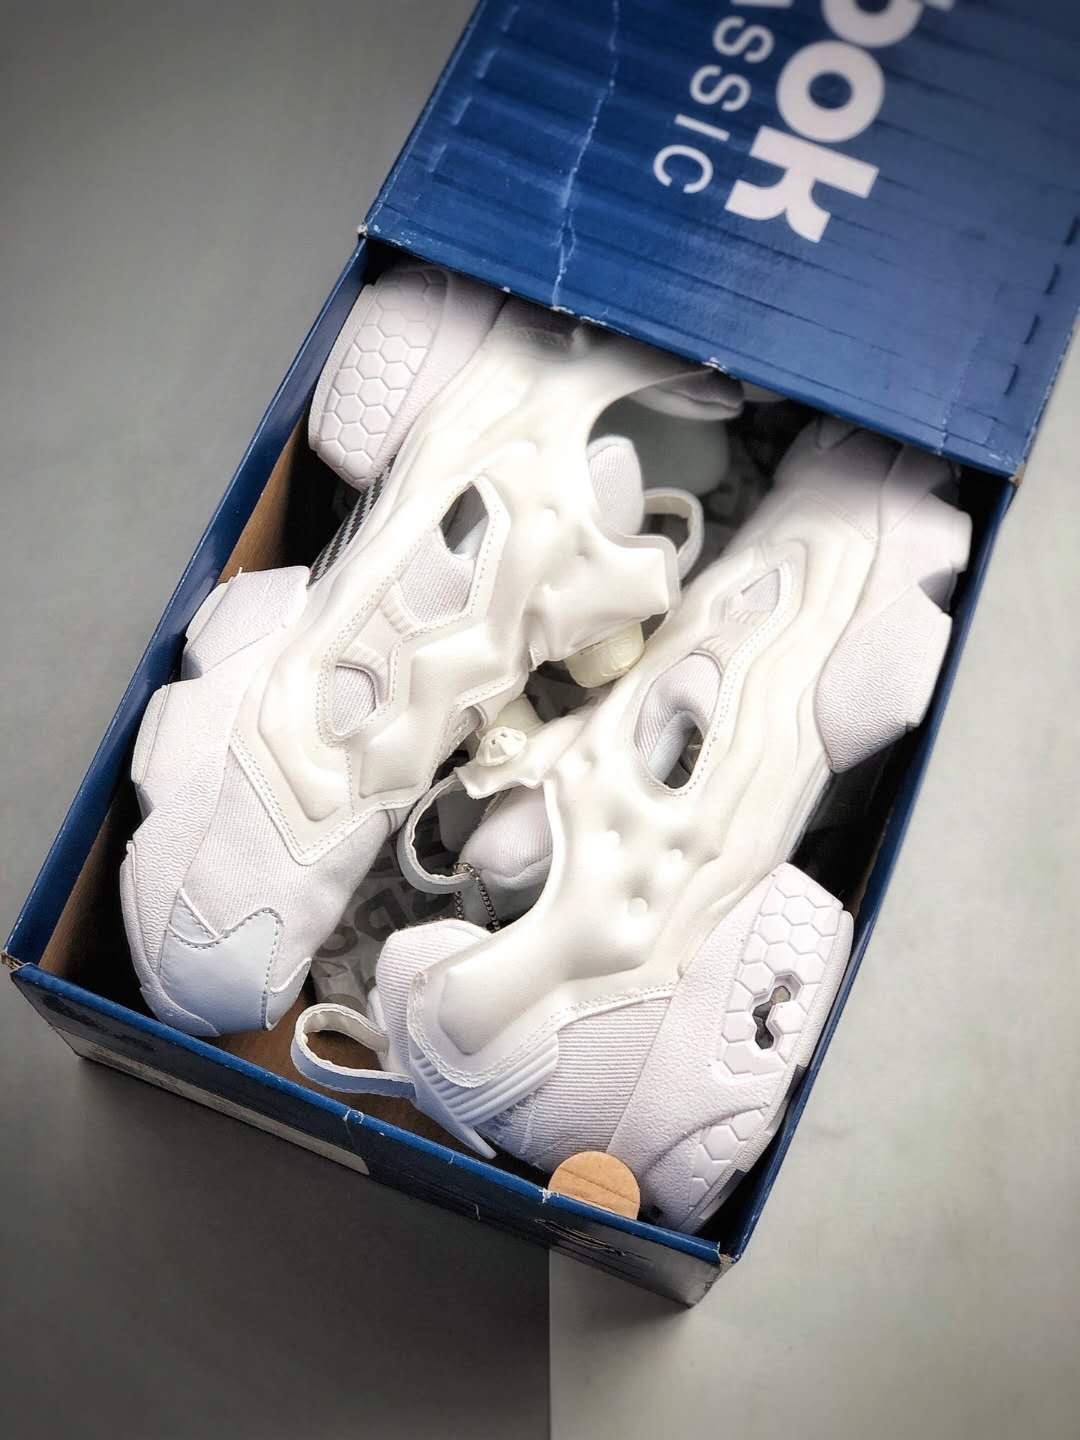 Reebok Atmos x InstaPump Fury OG 'White' V63458 - Classic Style for Sneakerheads